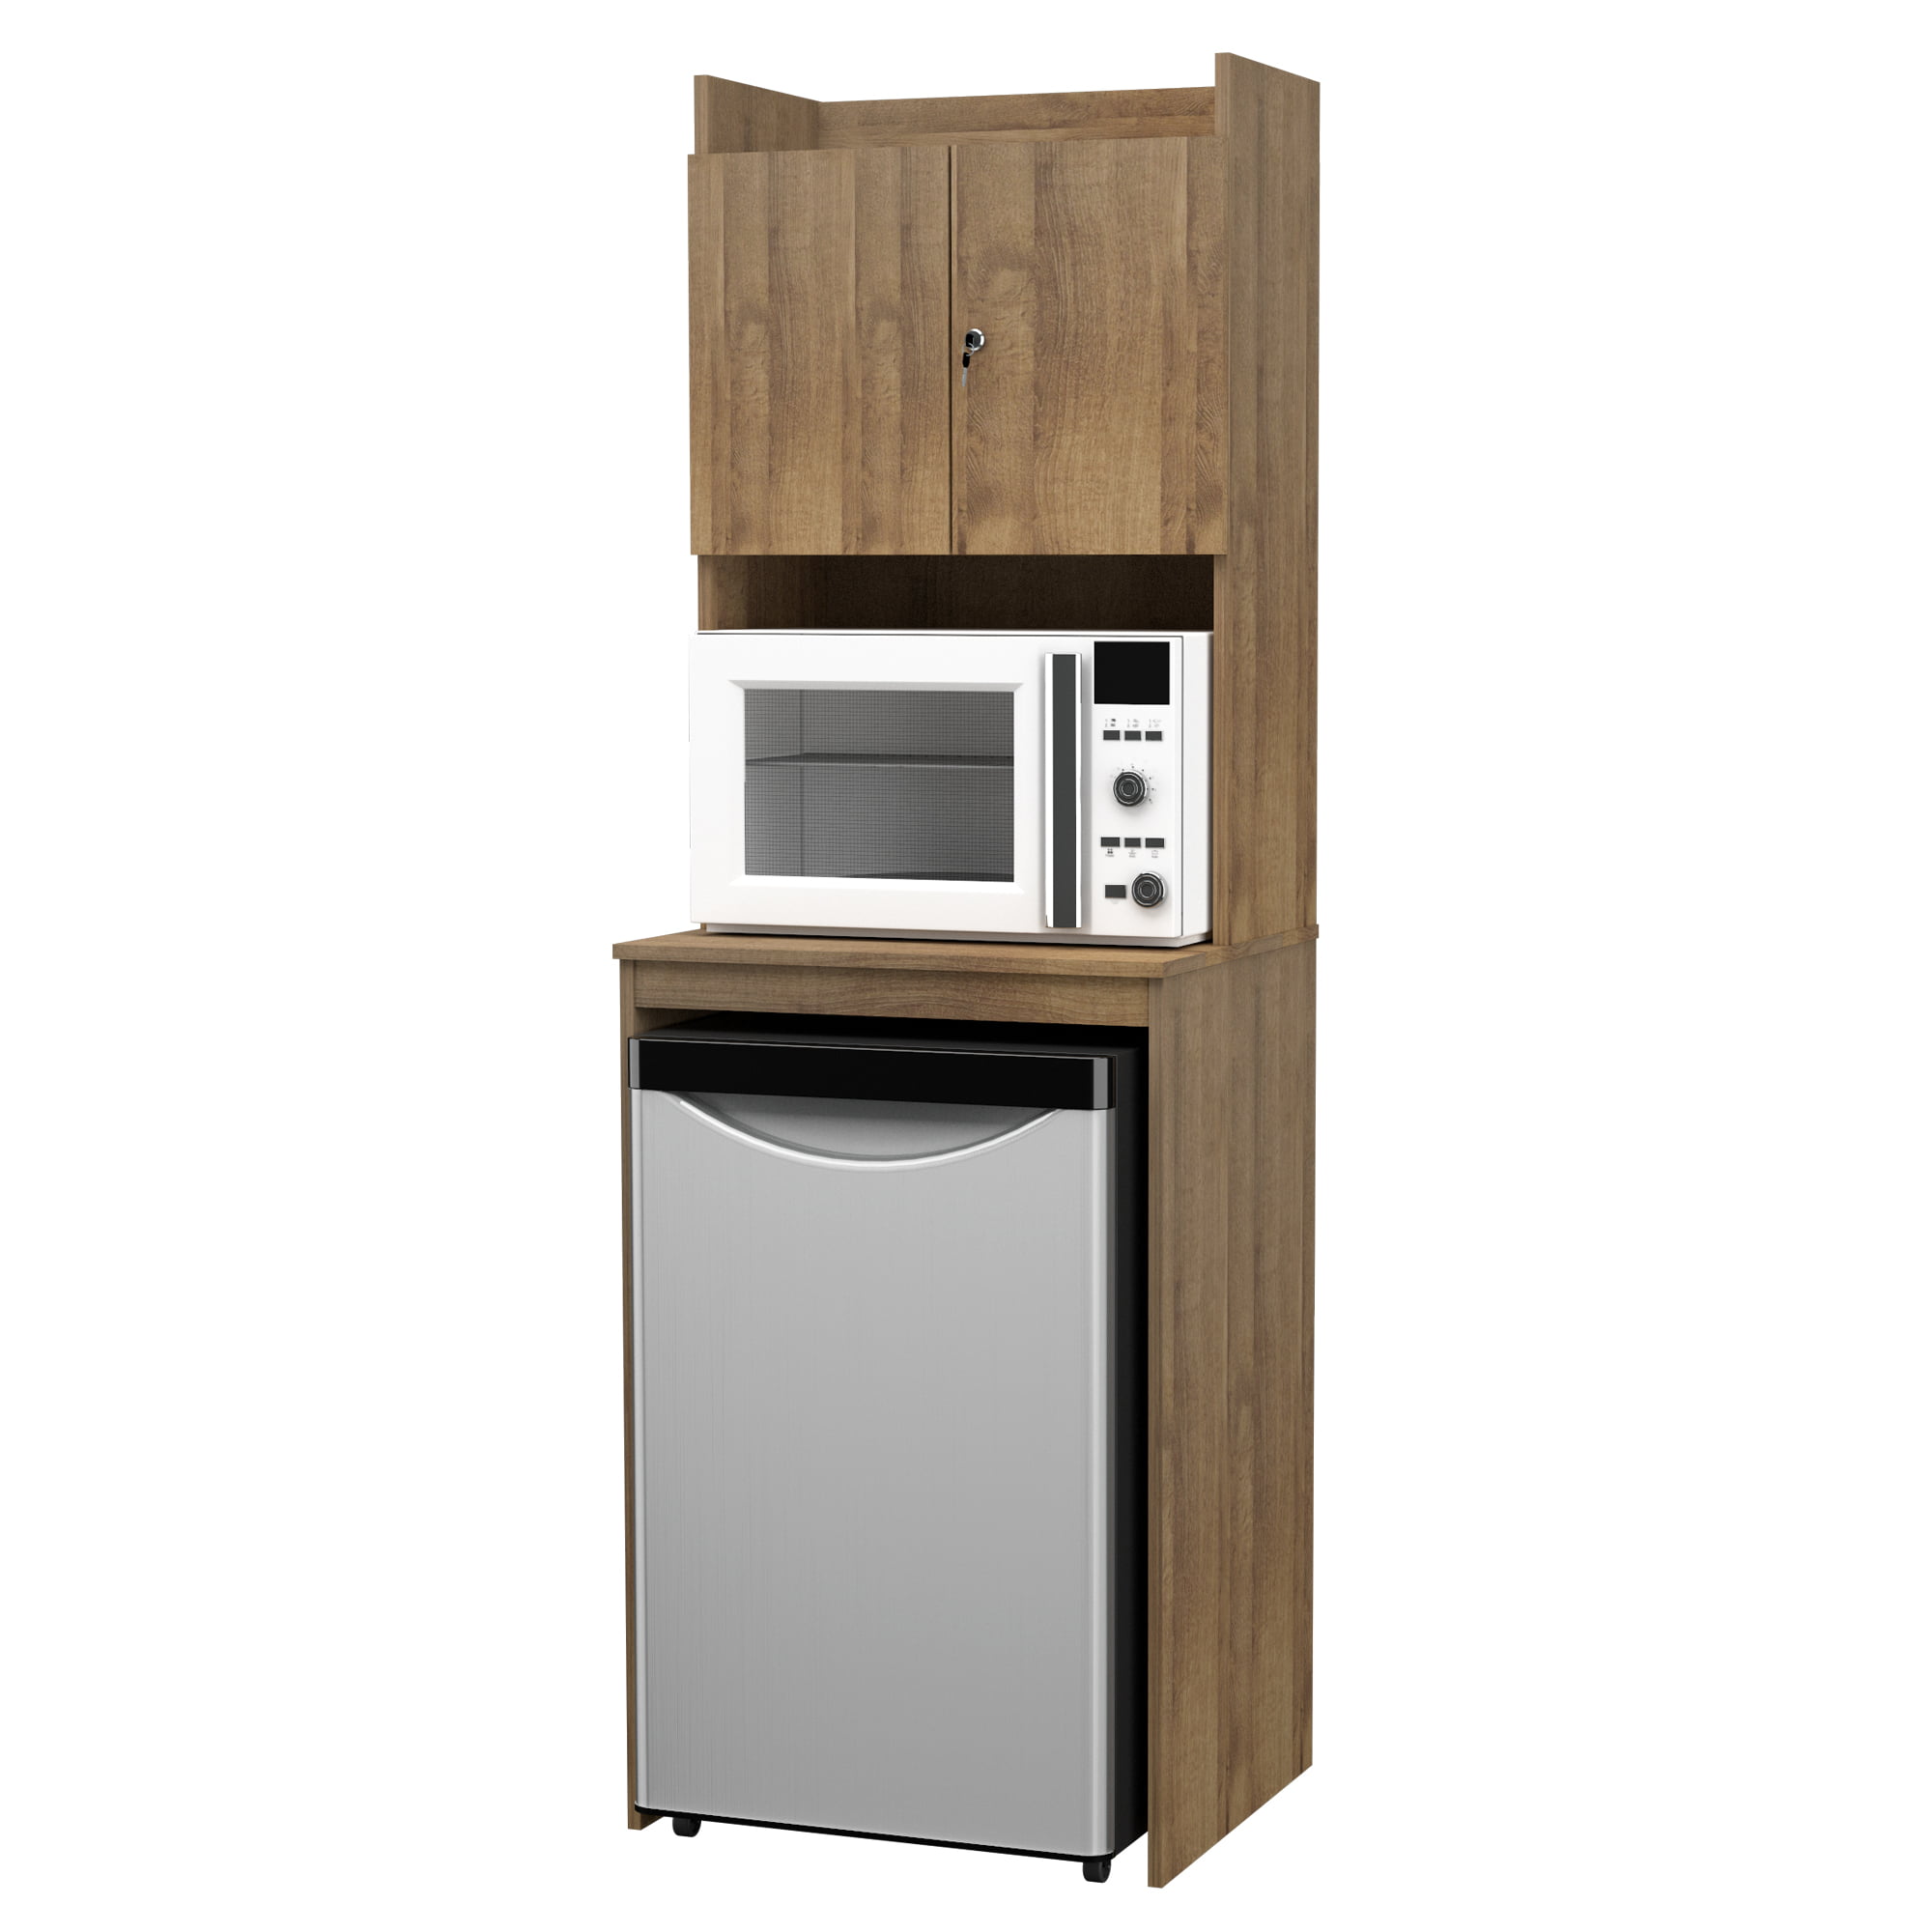 KirKical 3-Tier Mini Fridge Cabinet with Storage, Industrial Style Kitchen Microwave Stand Baker Rack, Utility Storage Shelf with Mini Fridge Space